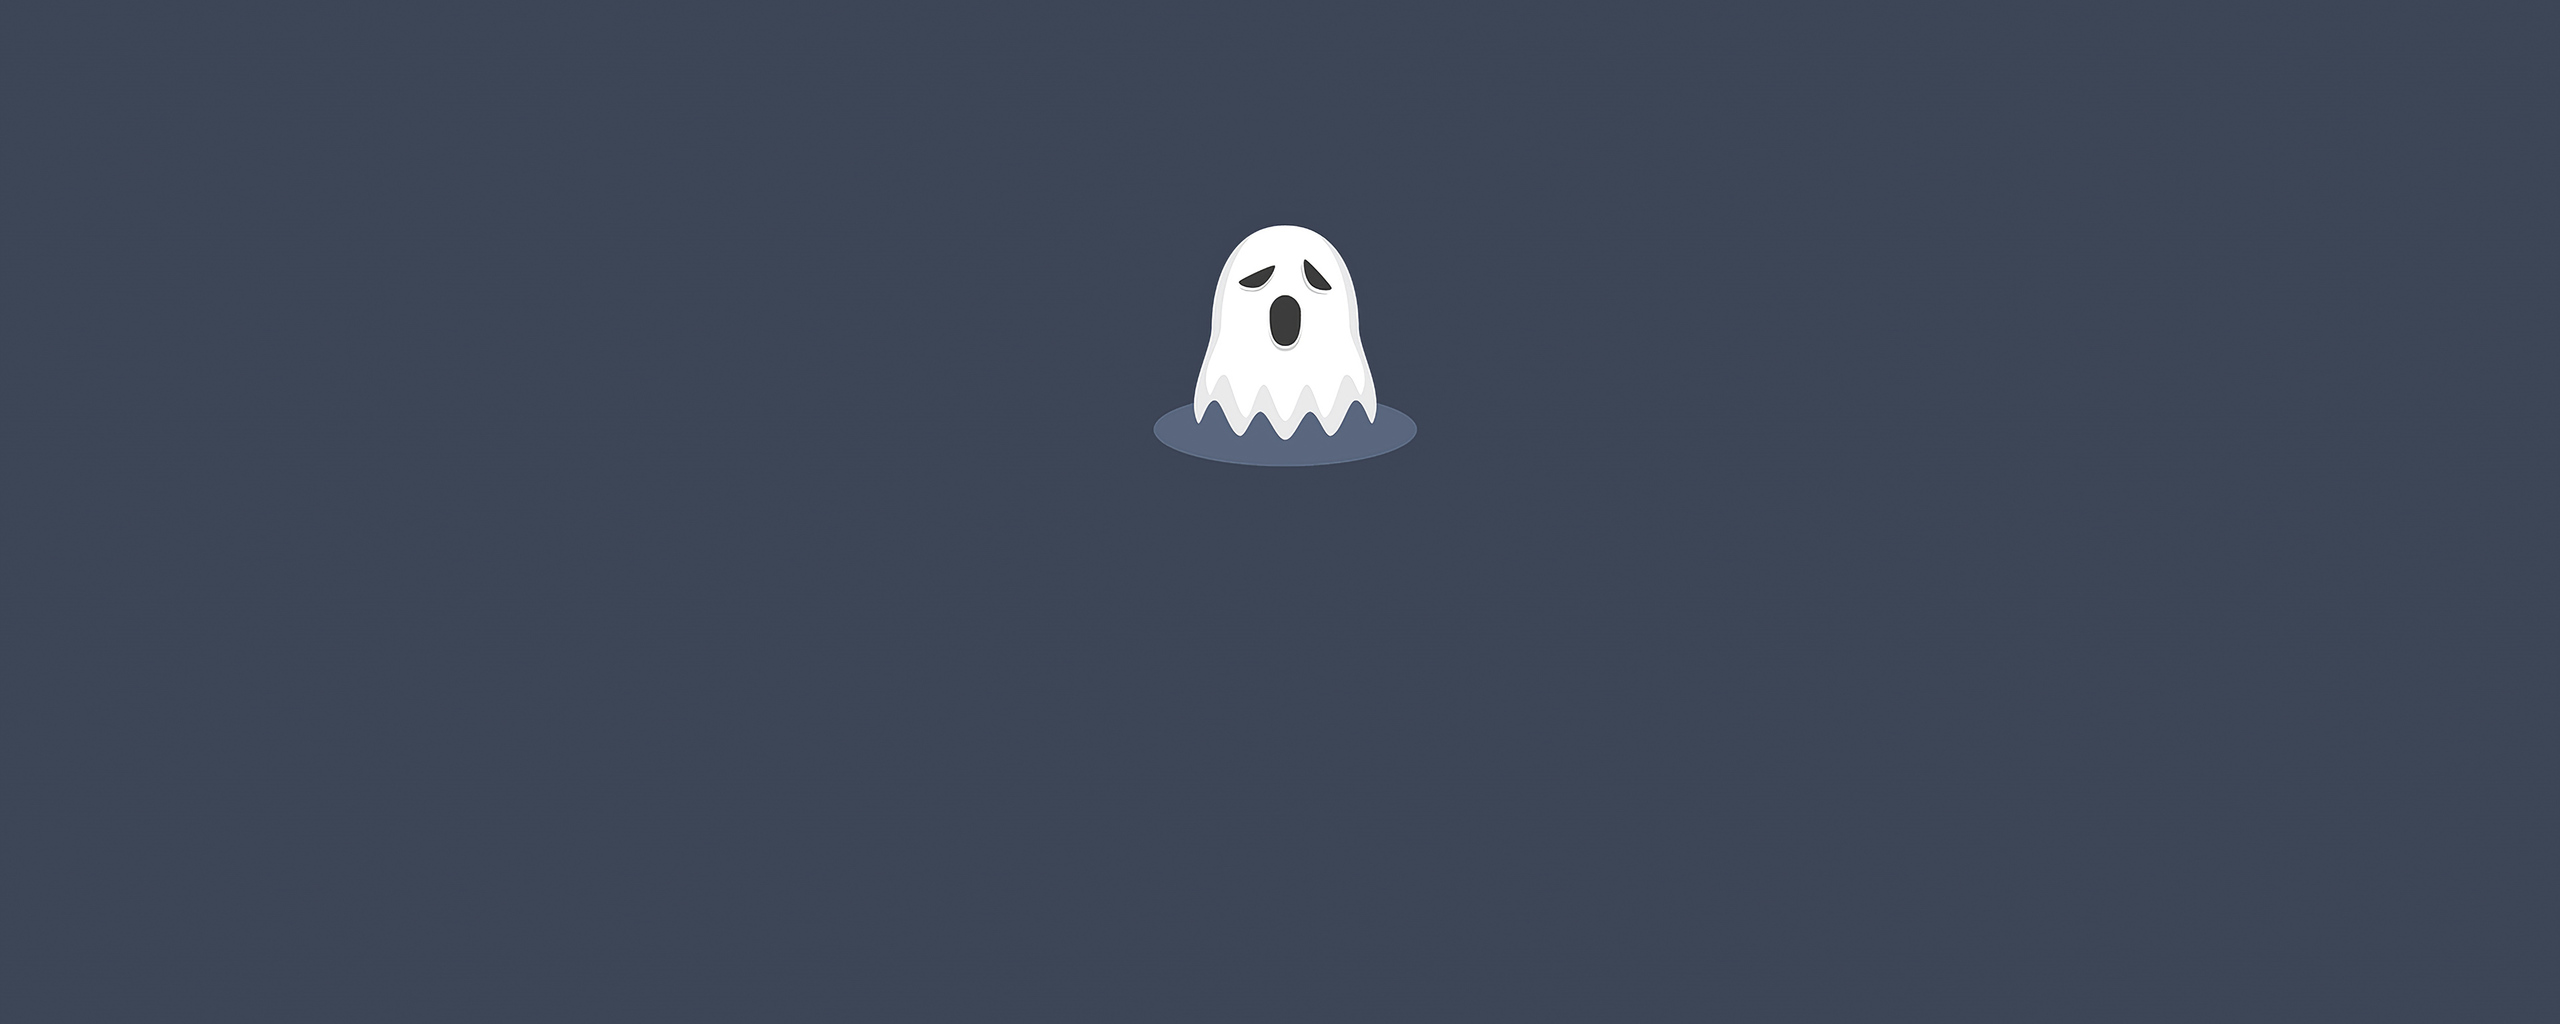 ghost-minimal-4k-l7.jpg